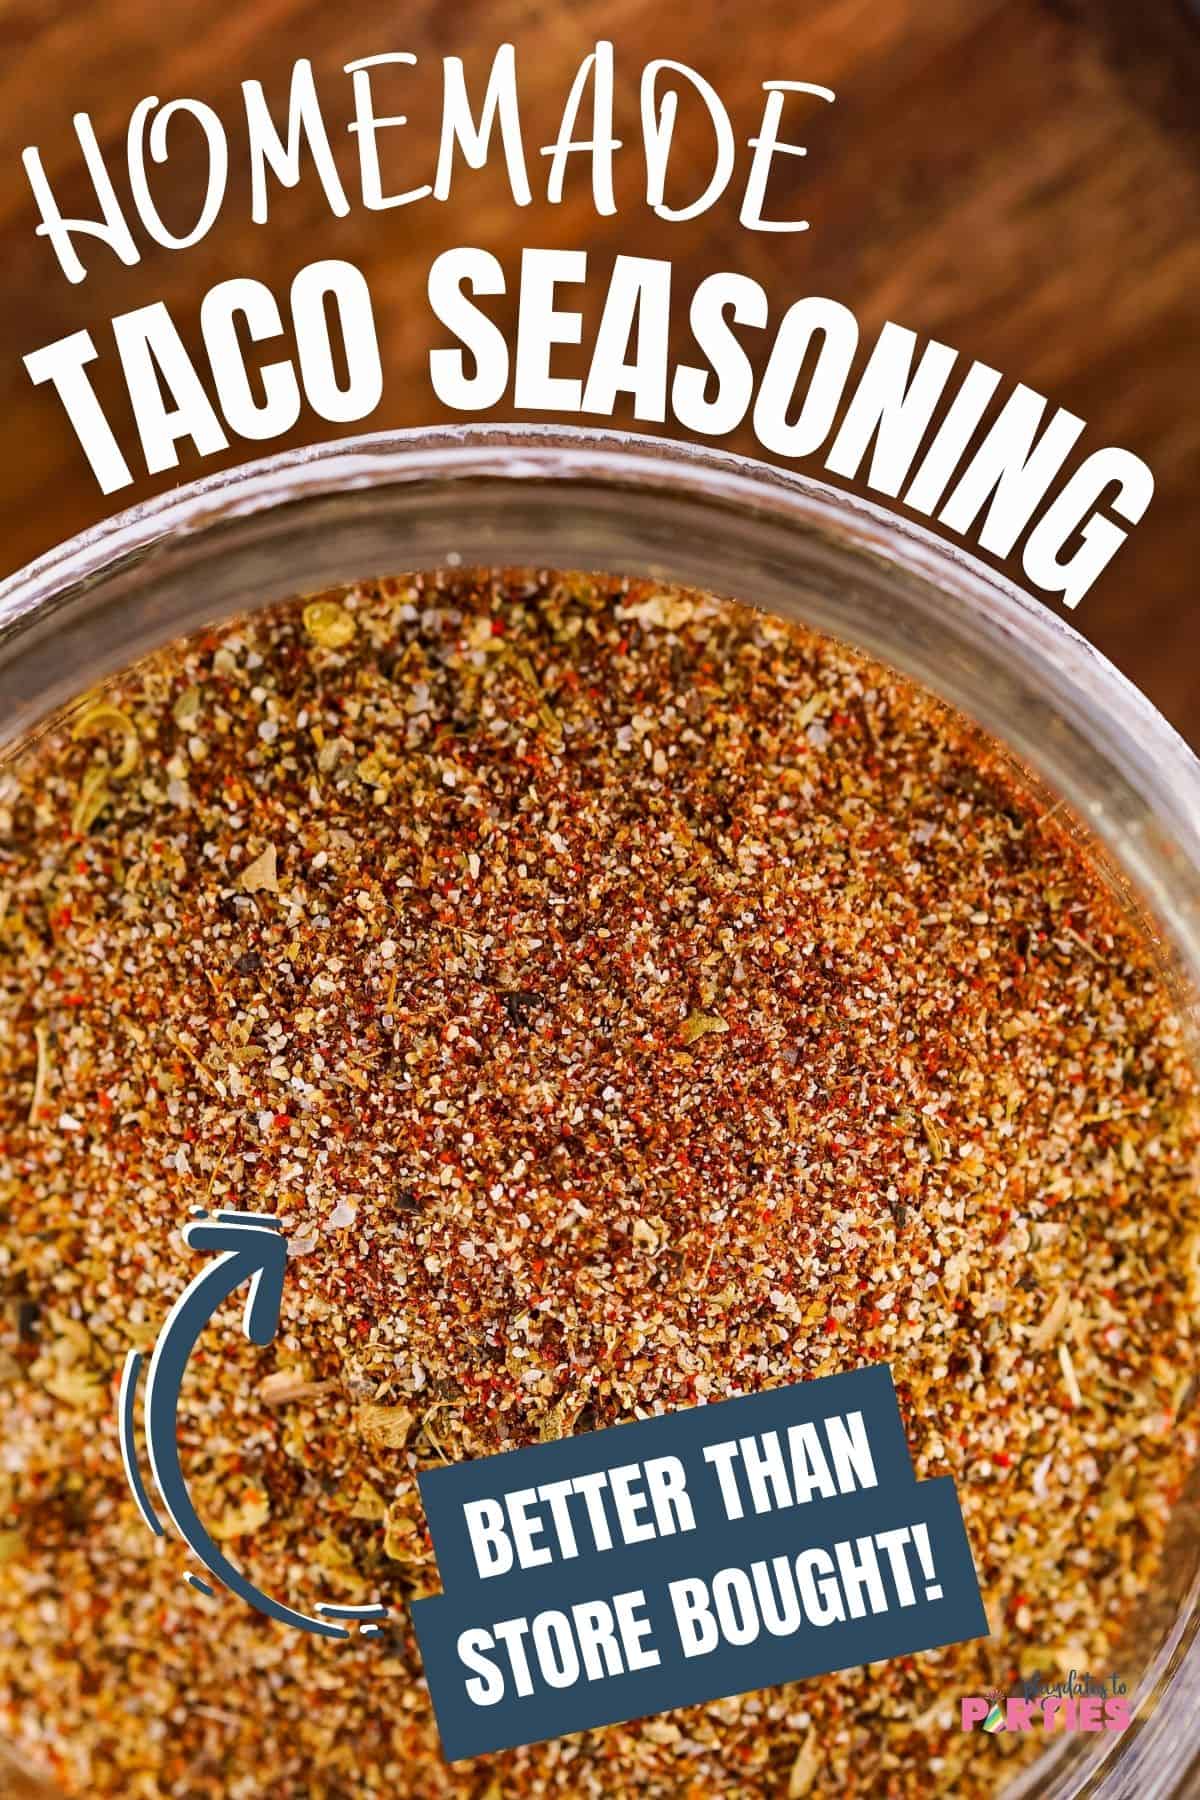 Homemade taco seasoning P1.